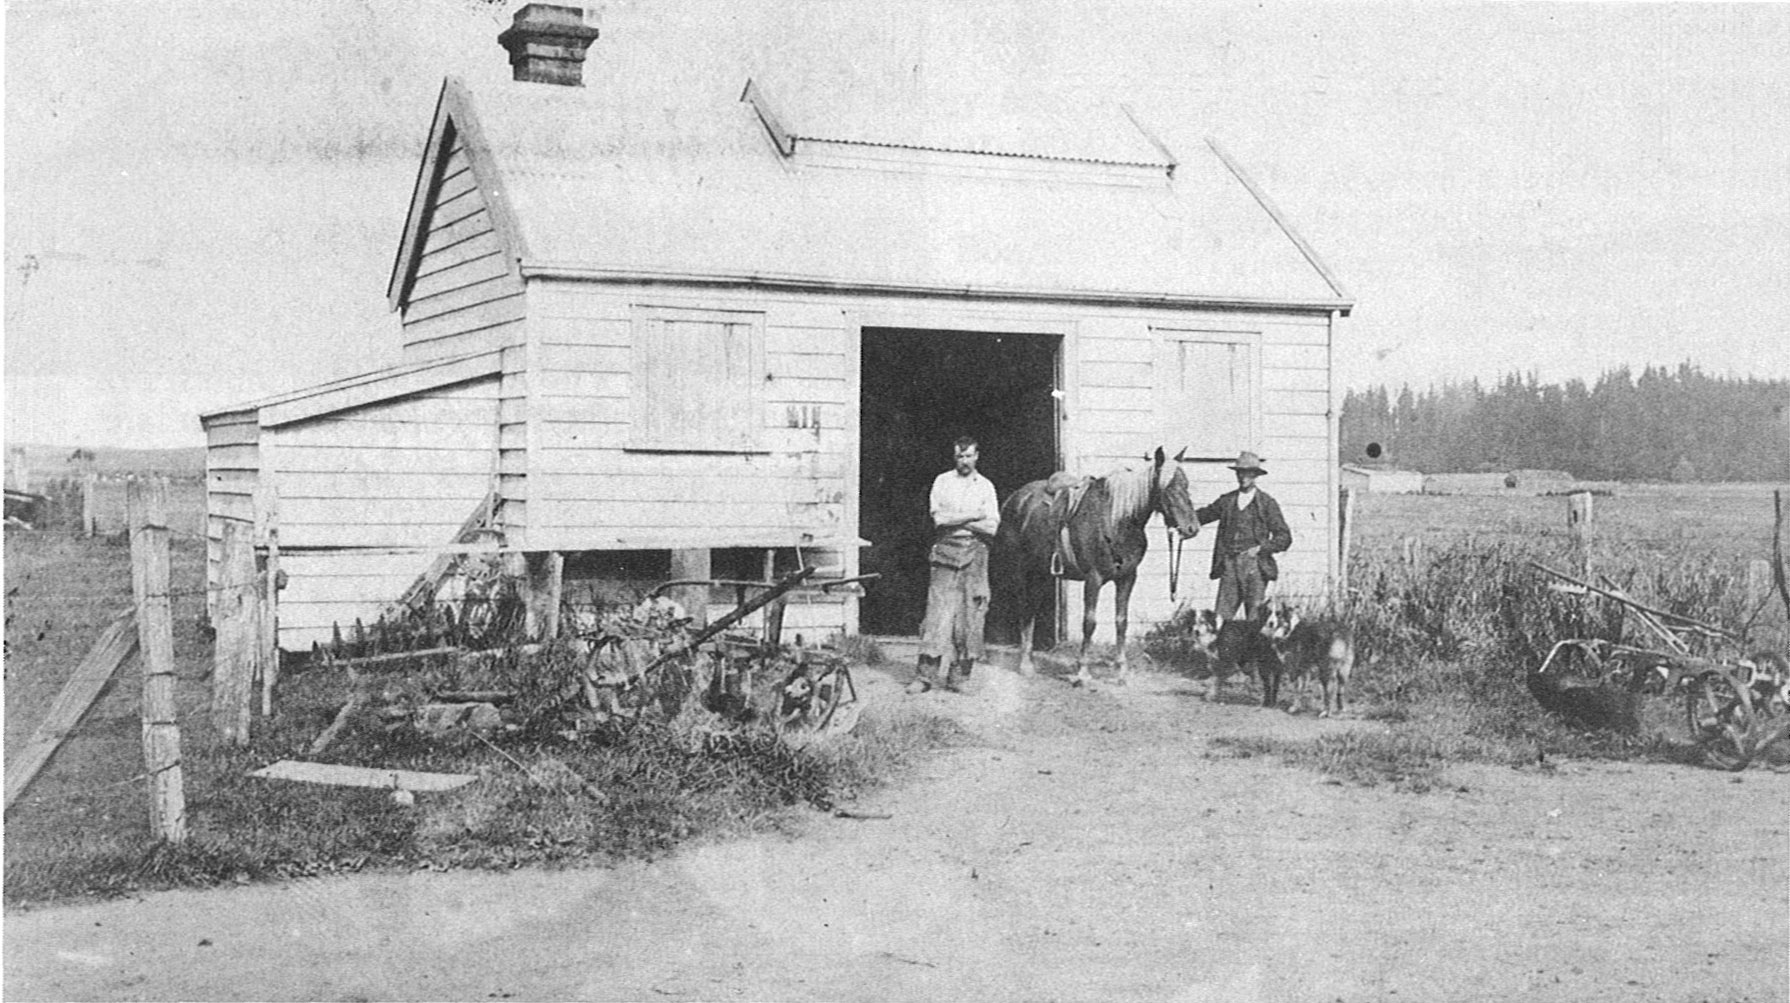 Mr Windsor, left, and his Blacksmith Shop, 1910.